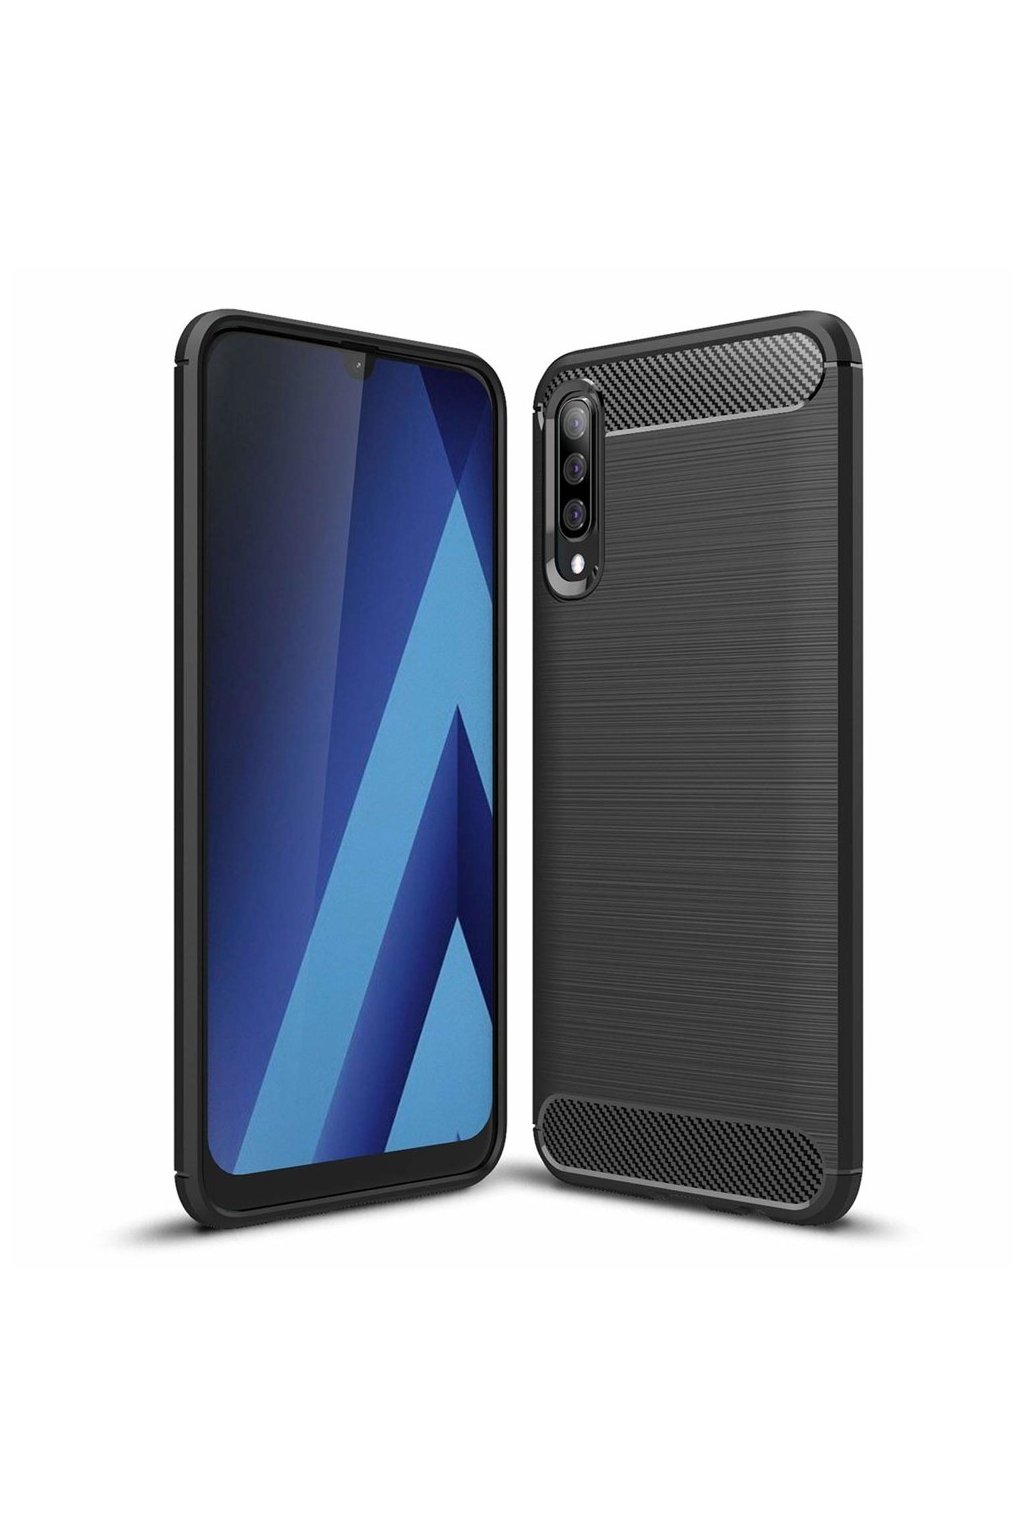 eng pl Carbon Case Flexible Cover TPU Case for Samsung Galaxy A50 black 49021 1